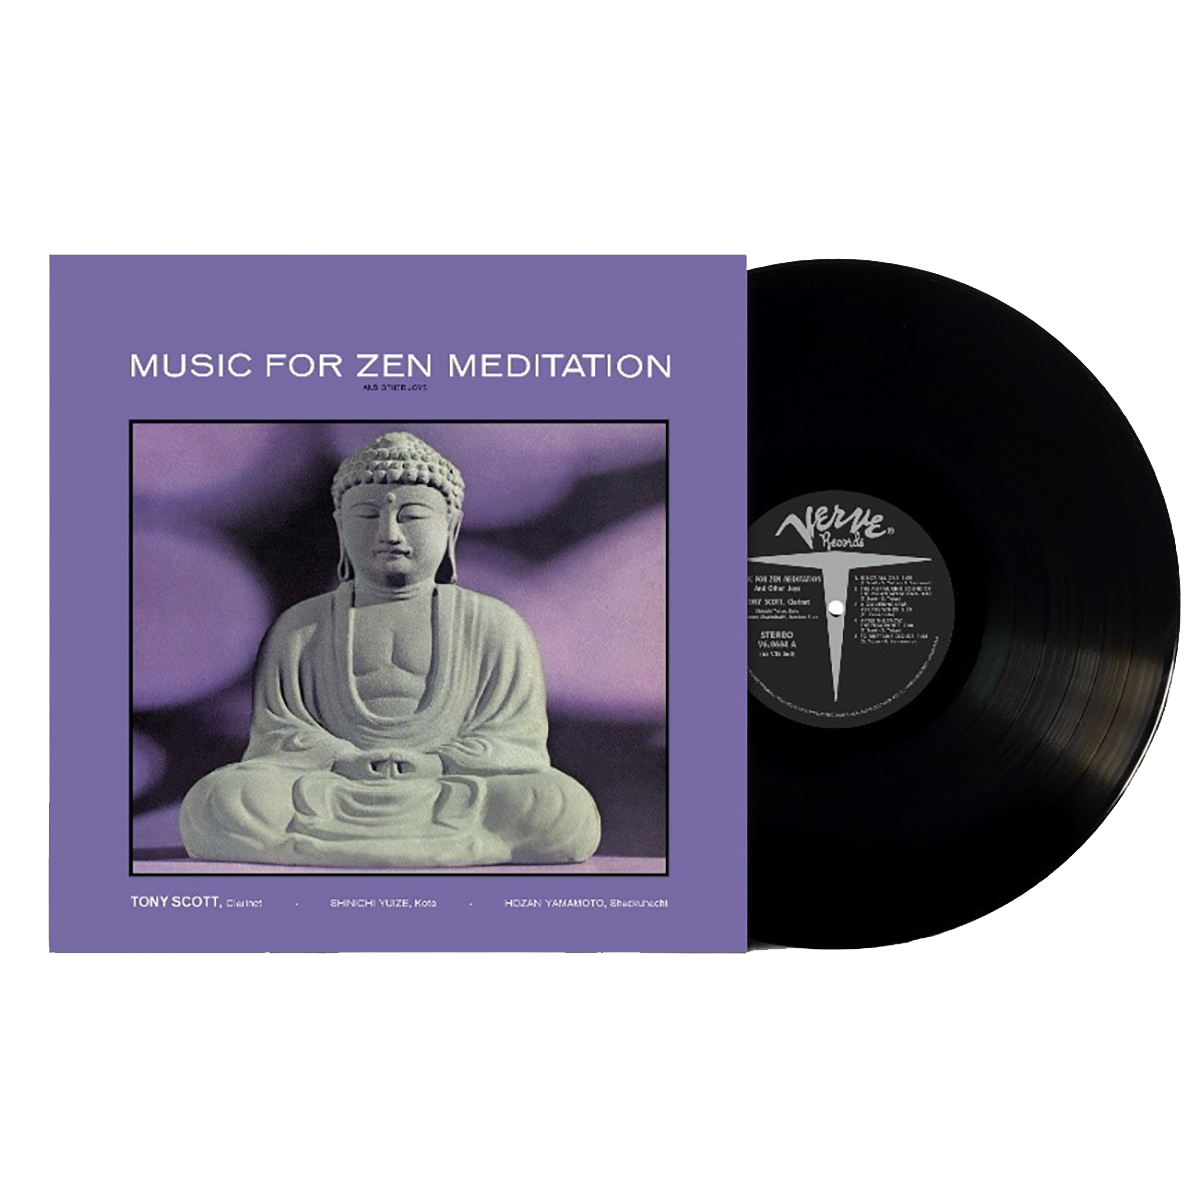 Tony Scott - Music For Zen Meditation and Other Joys (Verve By Request): Vinyl LP